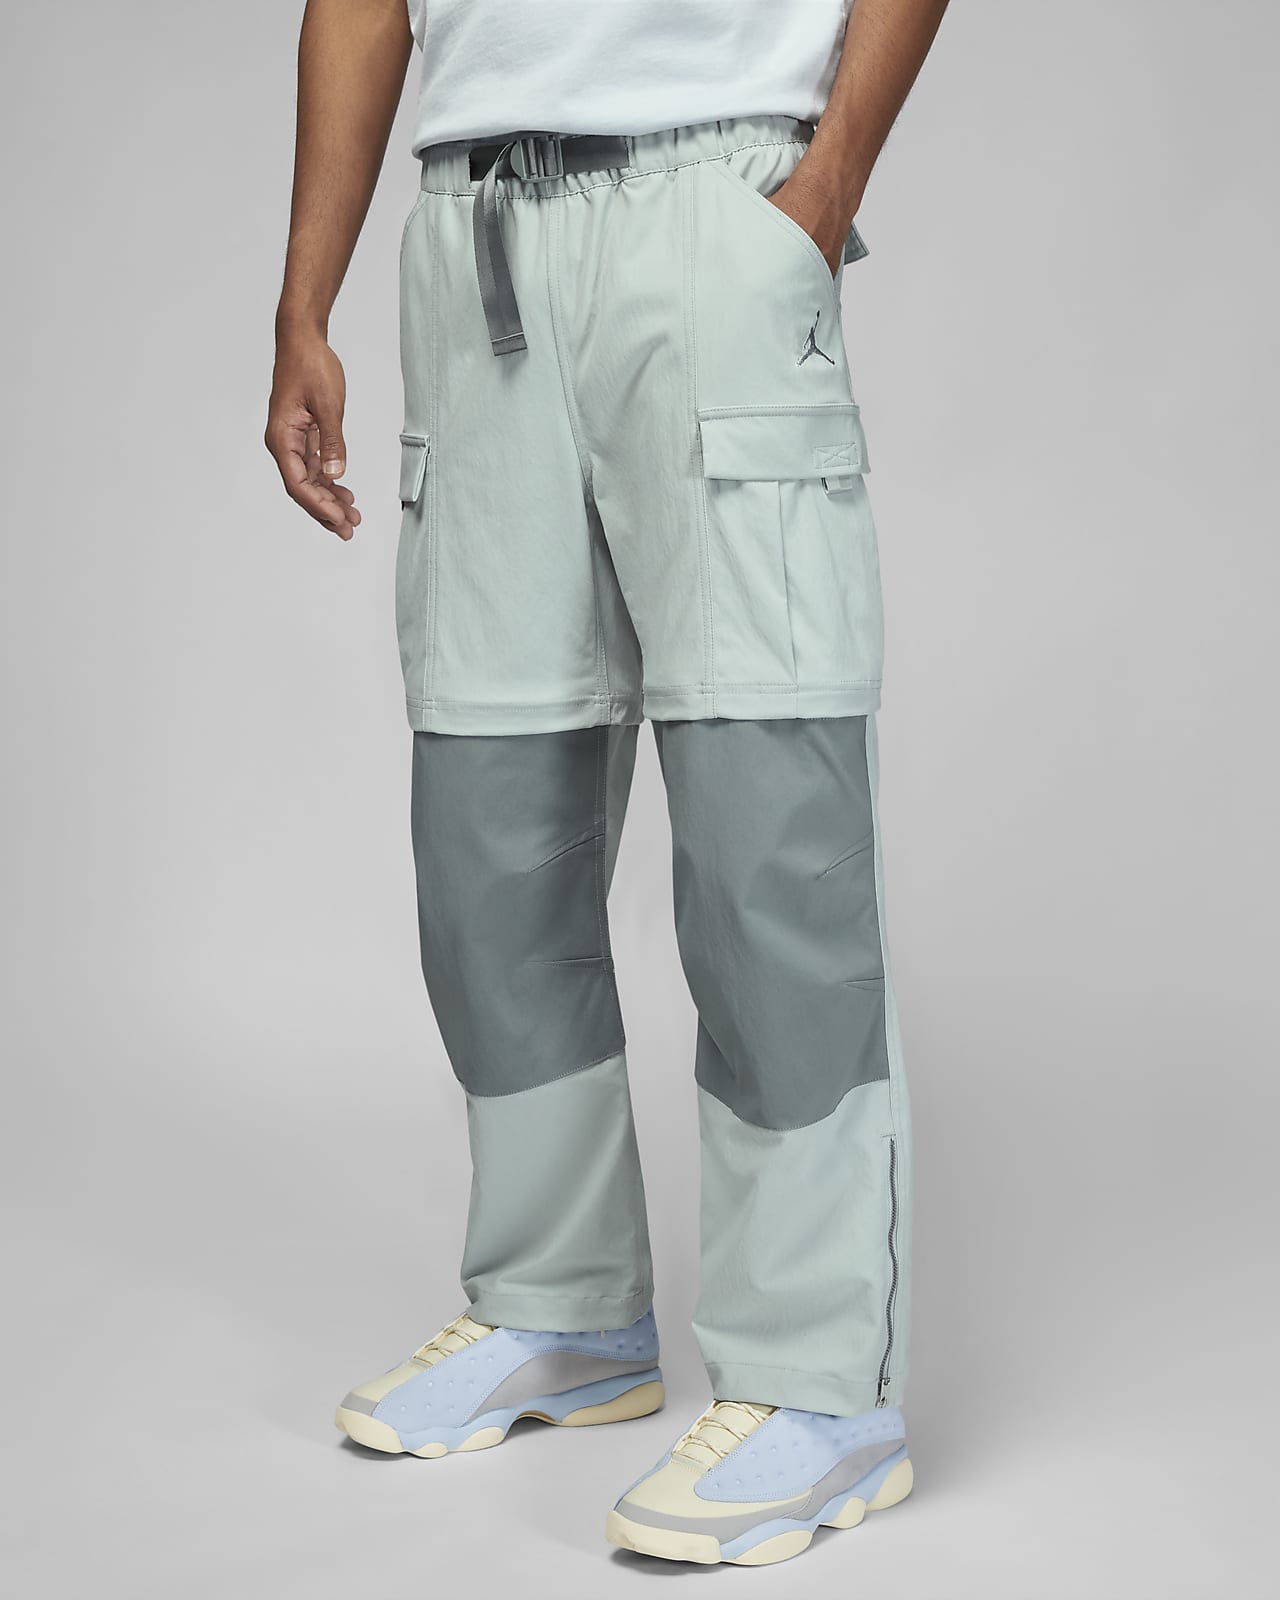 Shop Jordan Craig Twill Cargo Pants 5656MJ-KHA beige | SNIPES USA